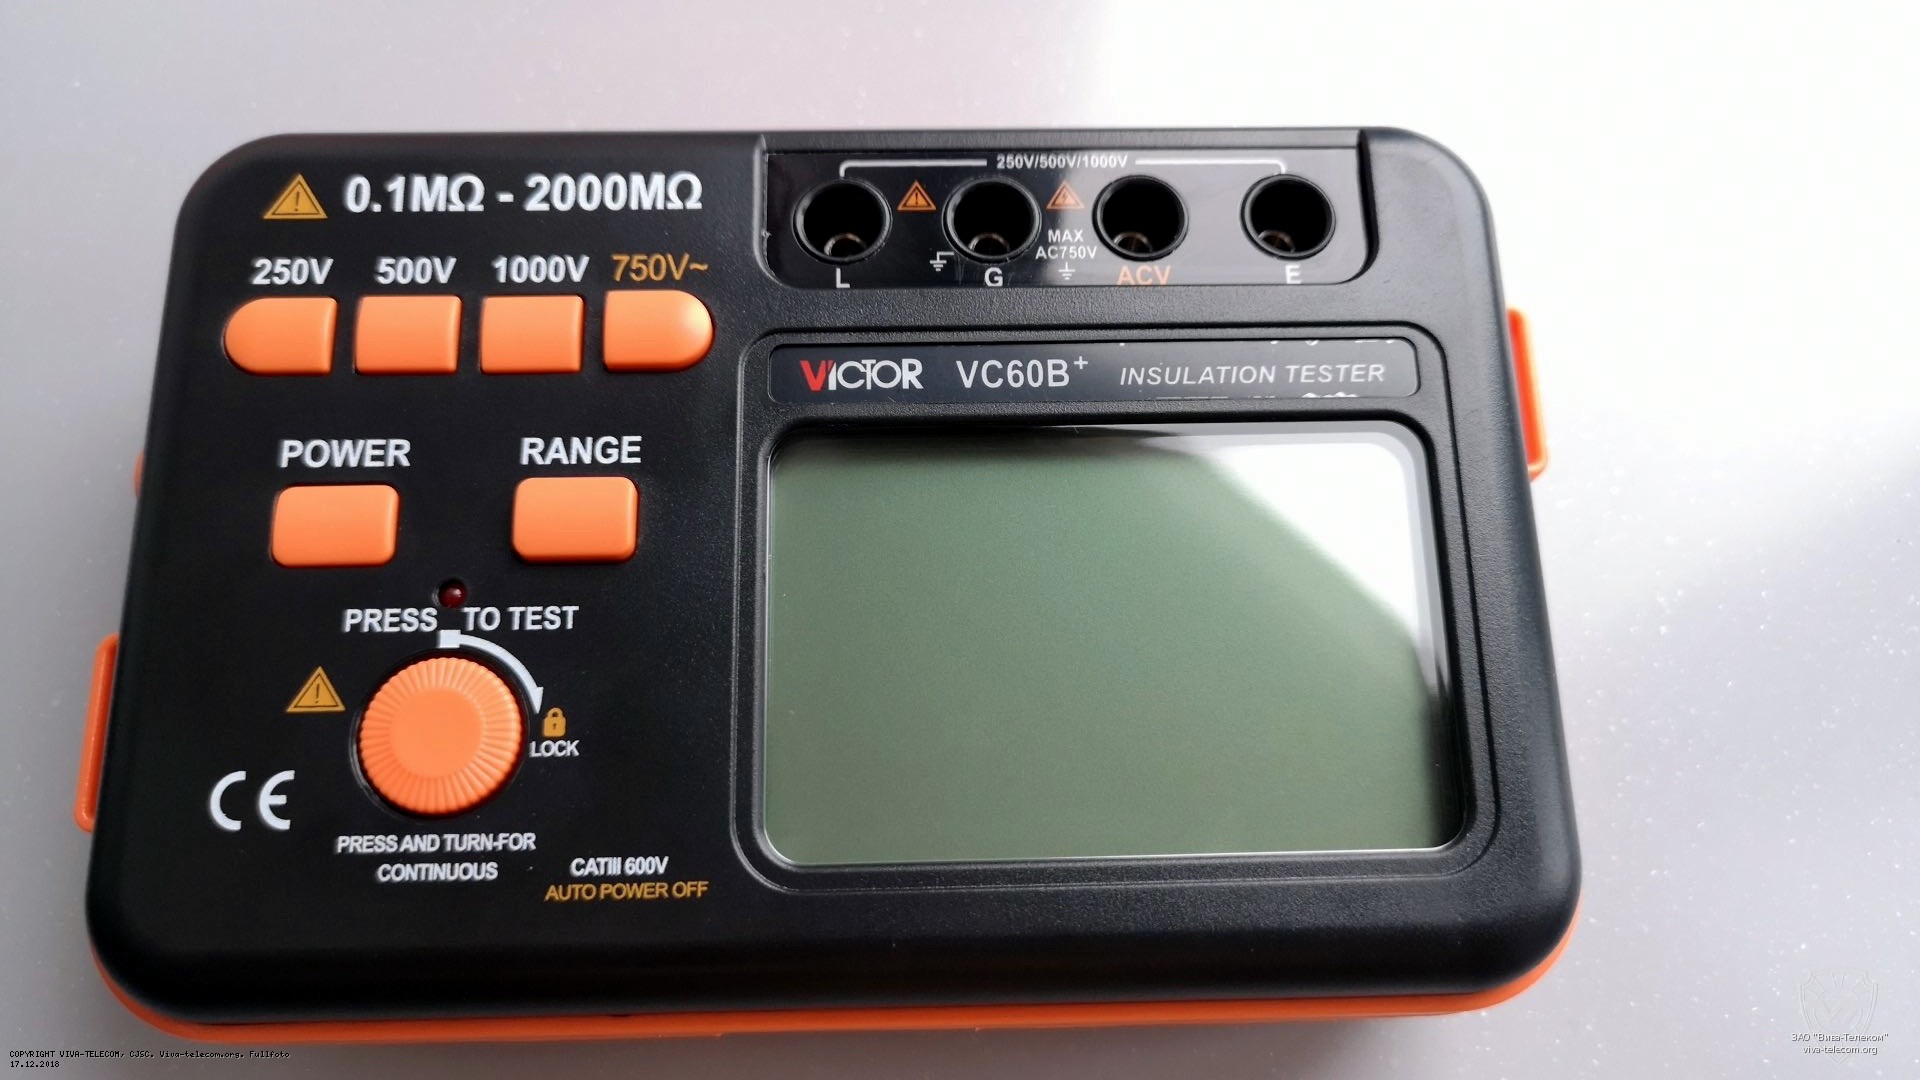    Victor VC60B+